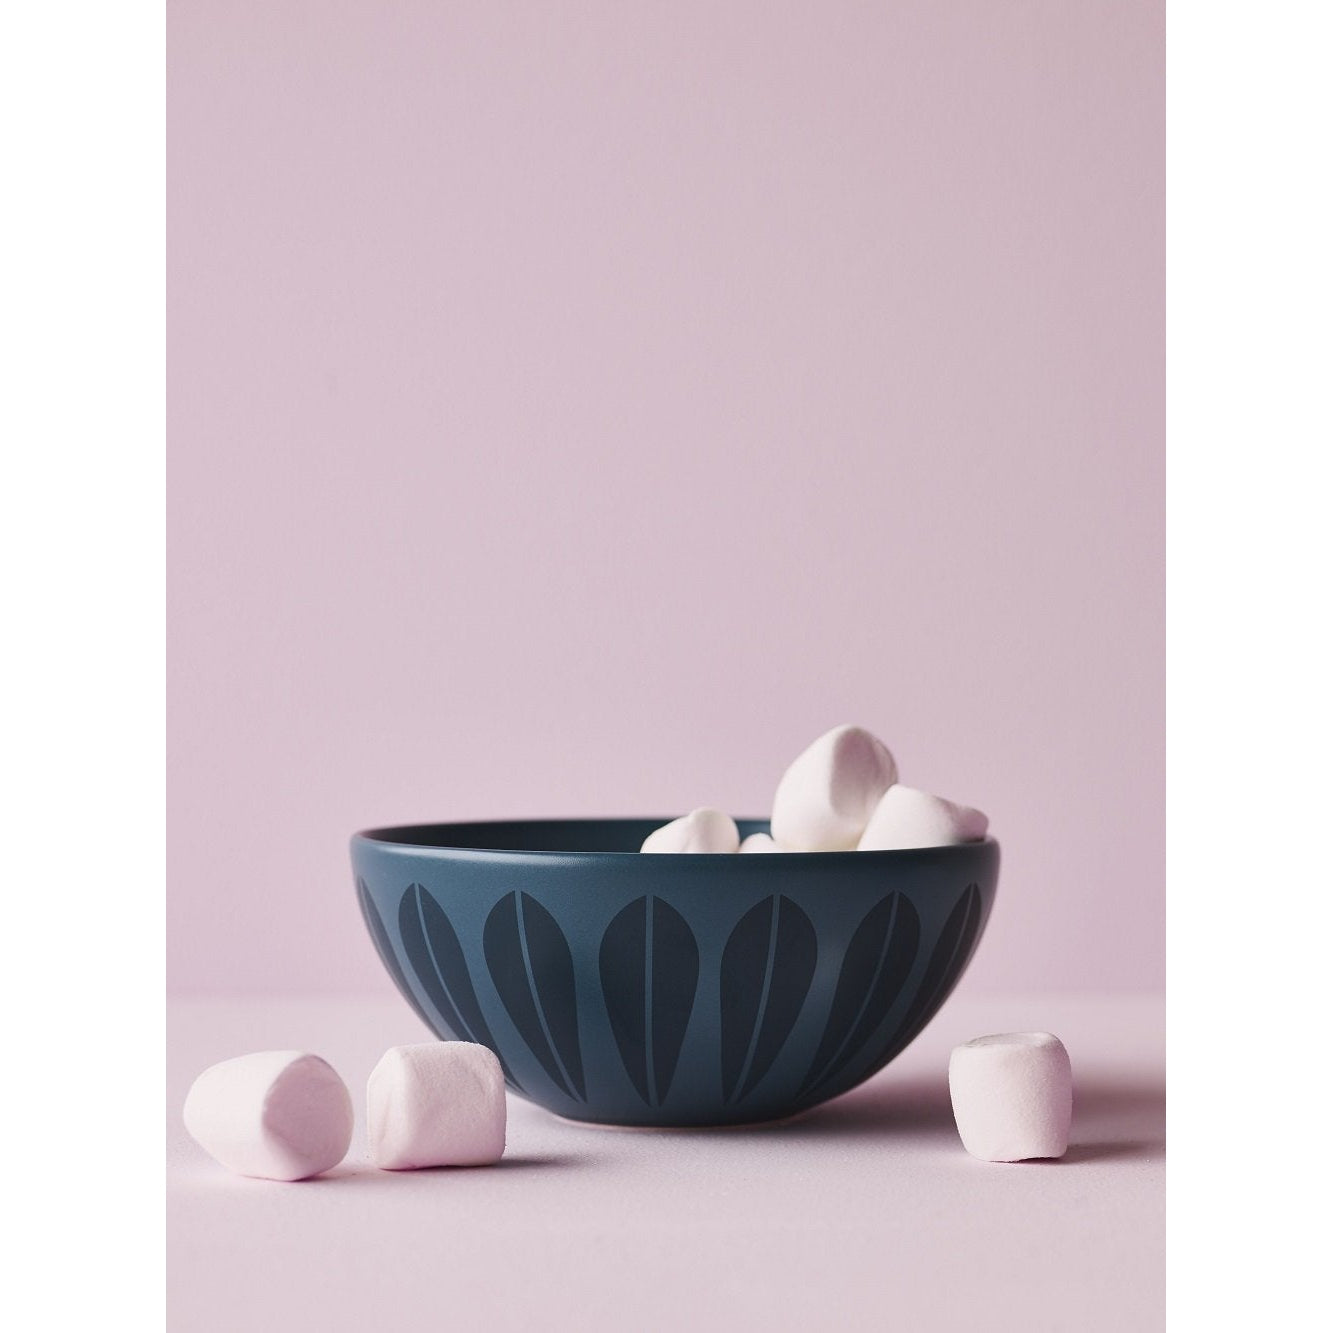 Lucie Kaas Arne Clausen Collection Sugar Bowl, Gray